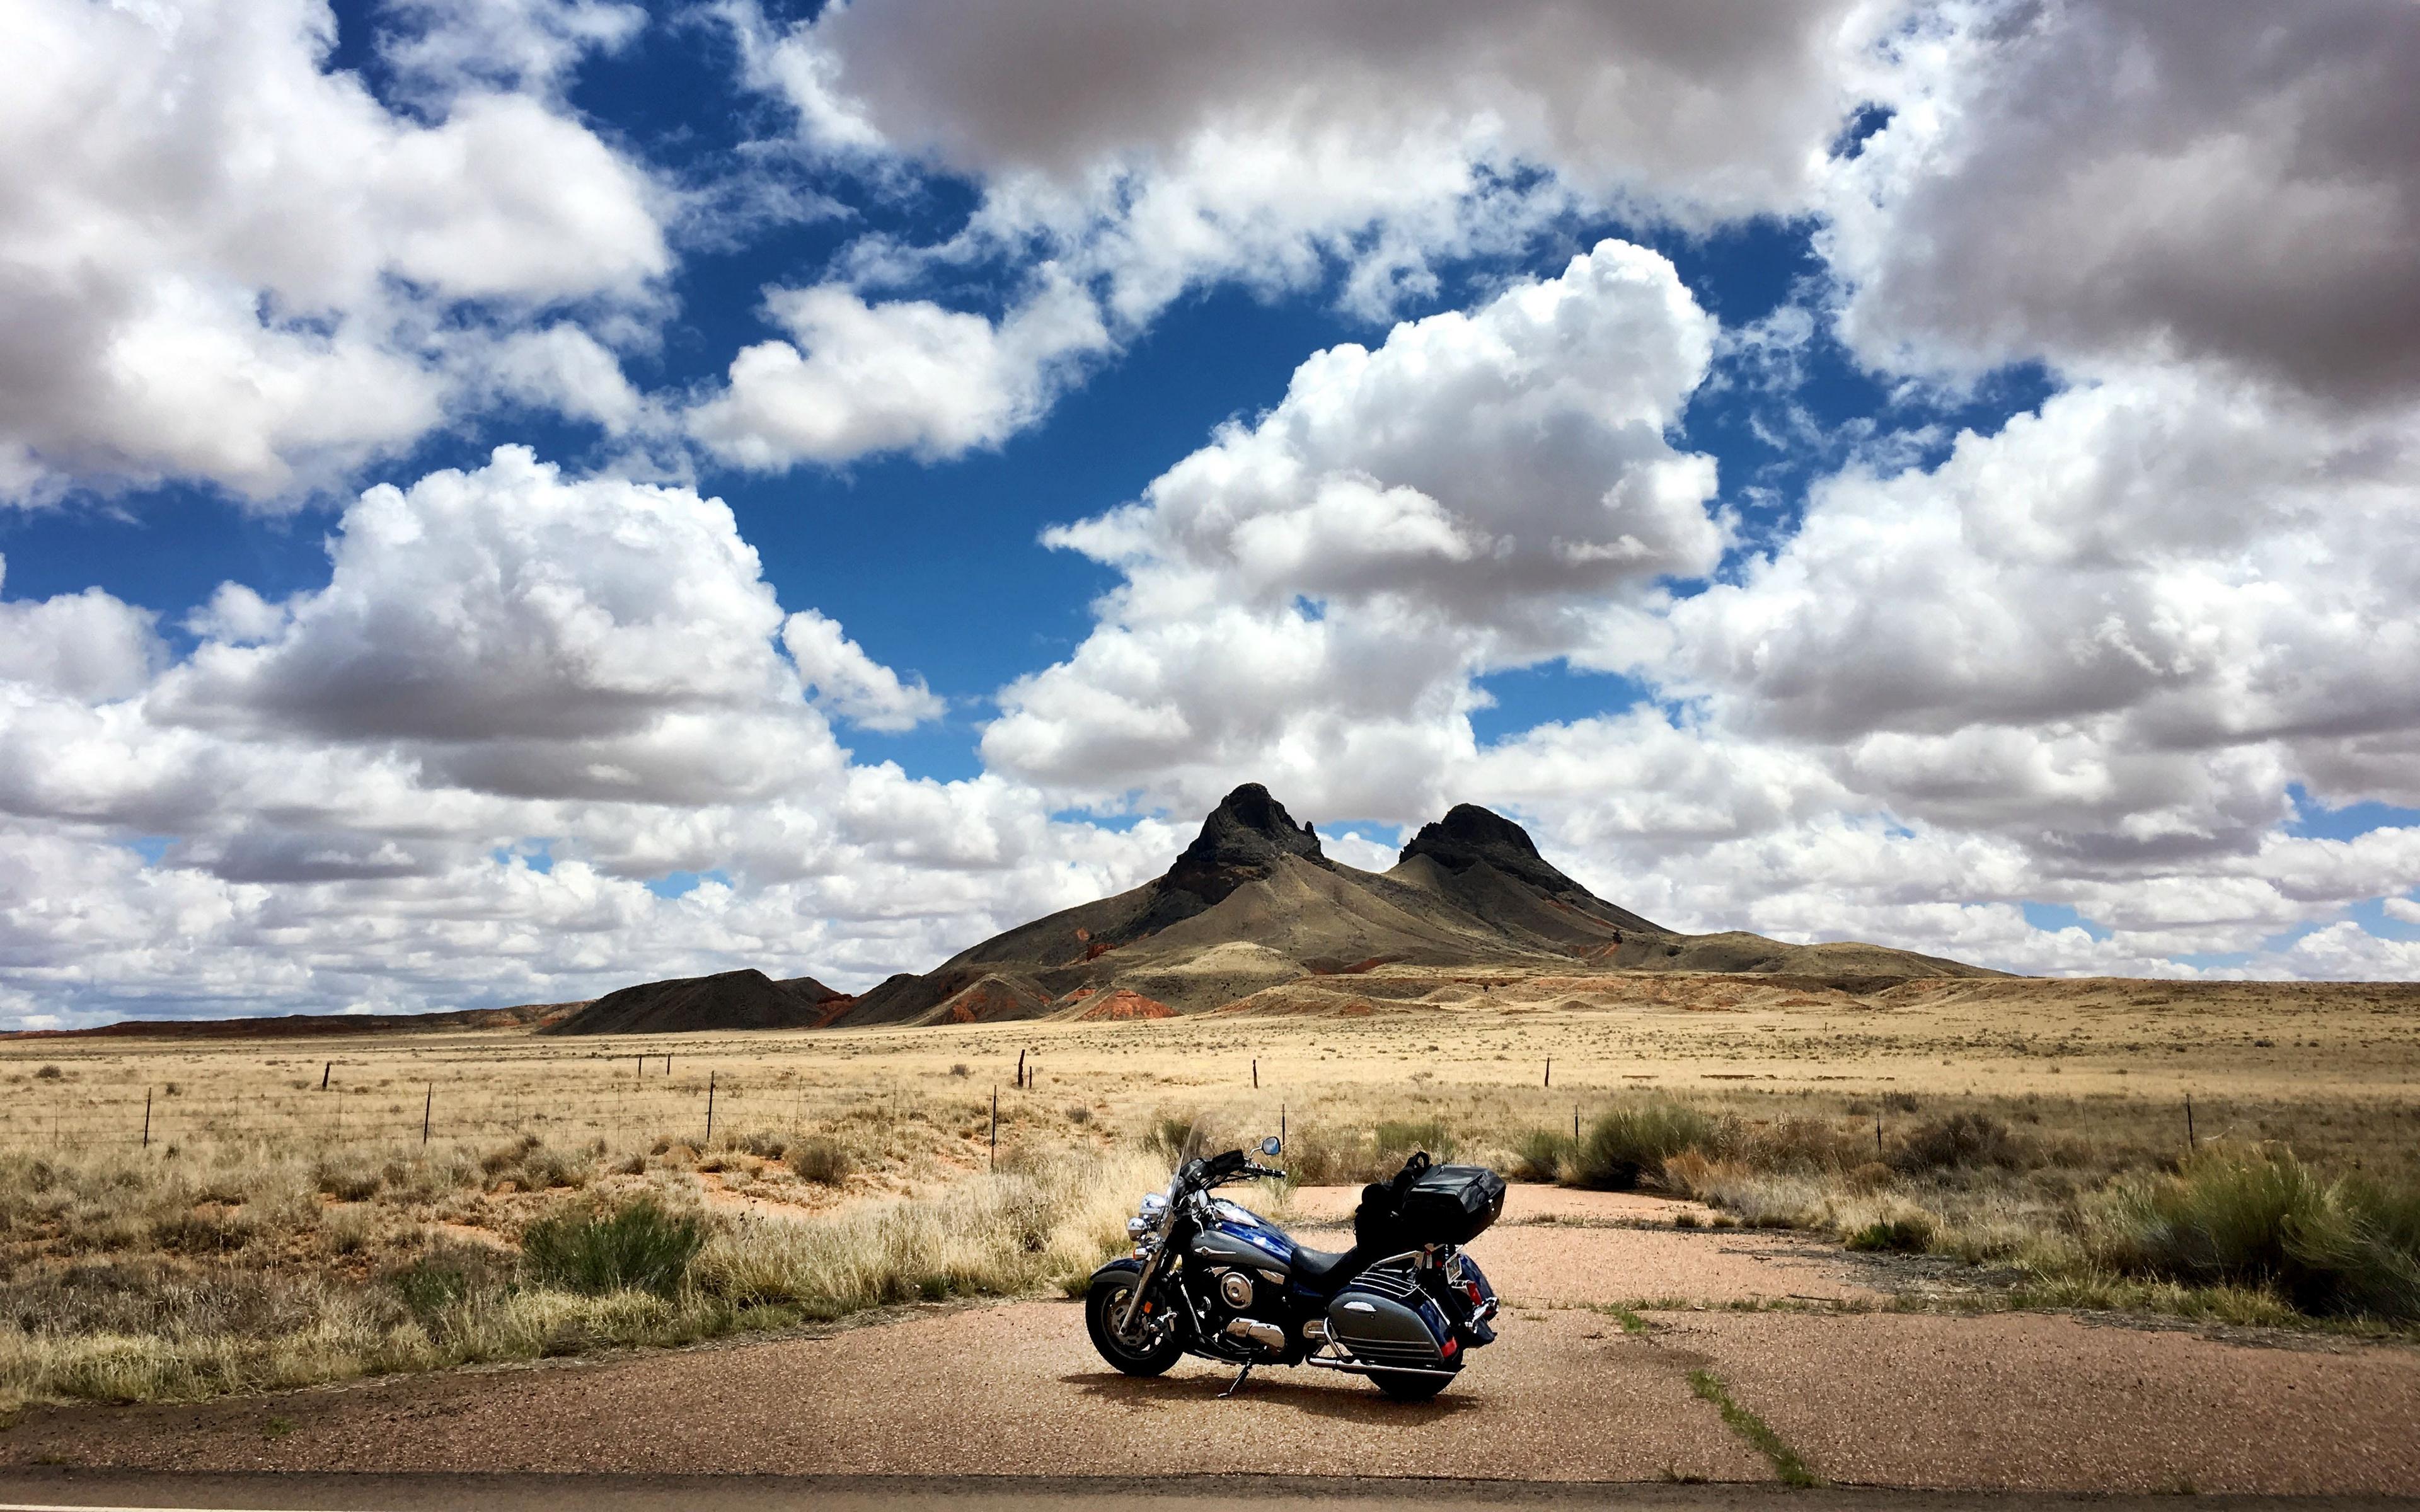 Download wallpaper 3840x2400 motorcycle, mountains, desert